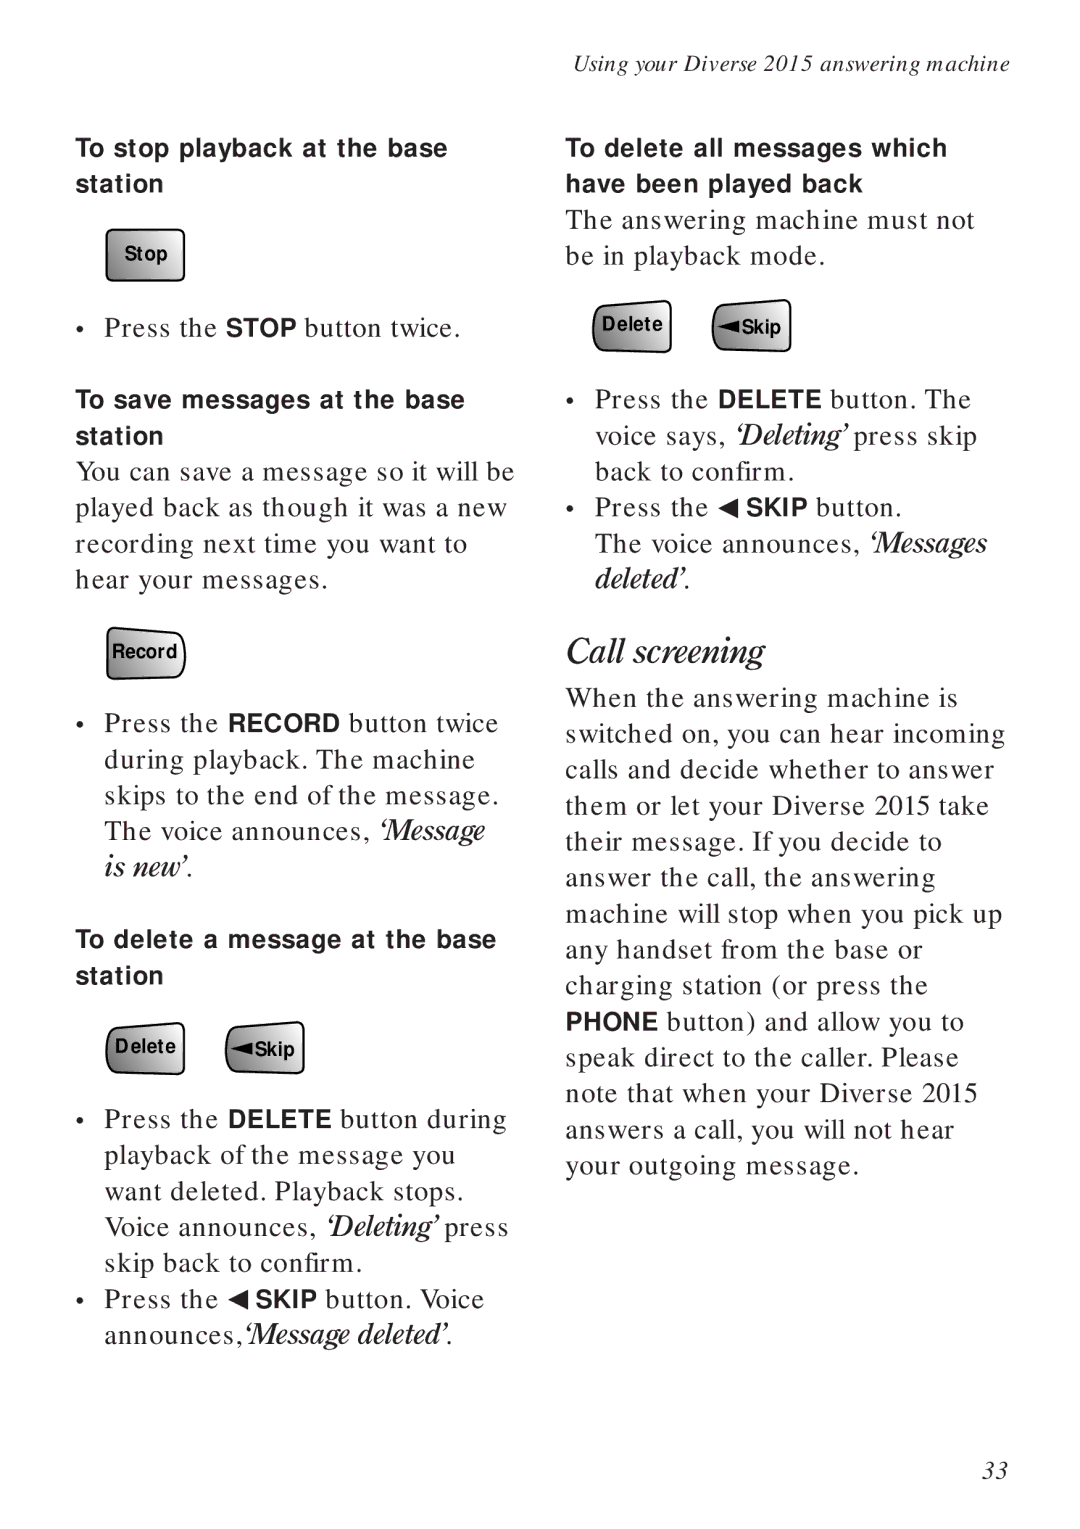 BT Diverse 2015 manual To stop playback at the base station, To save messages at the base station 